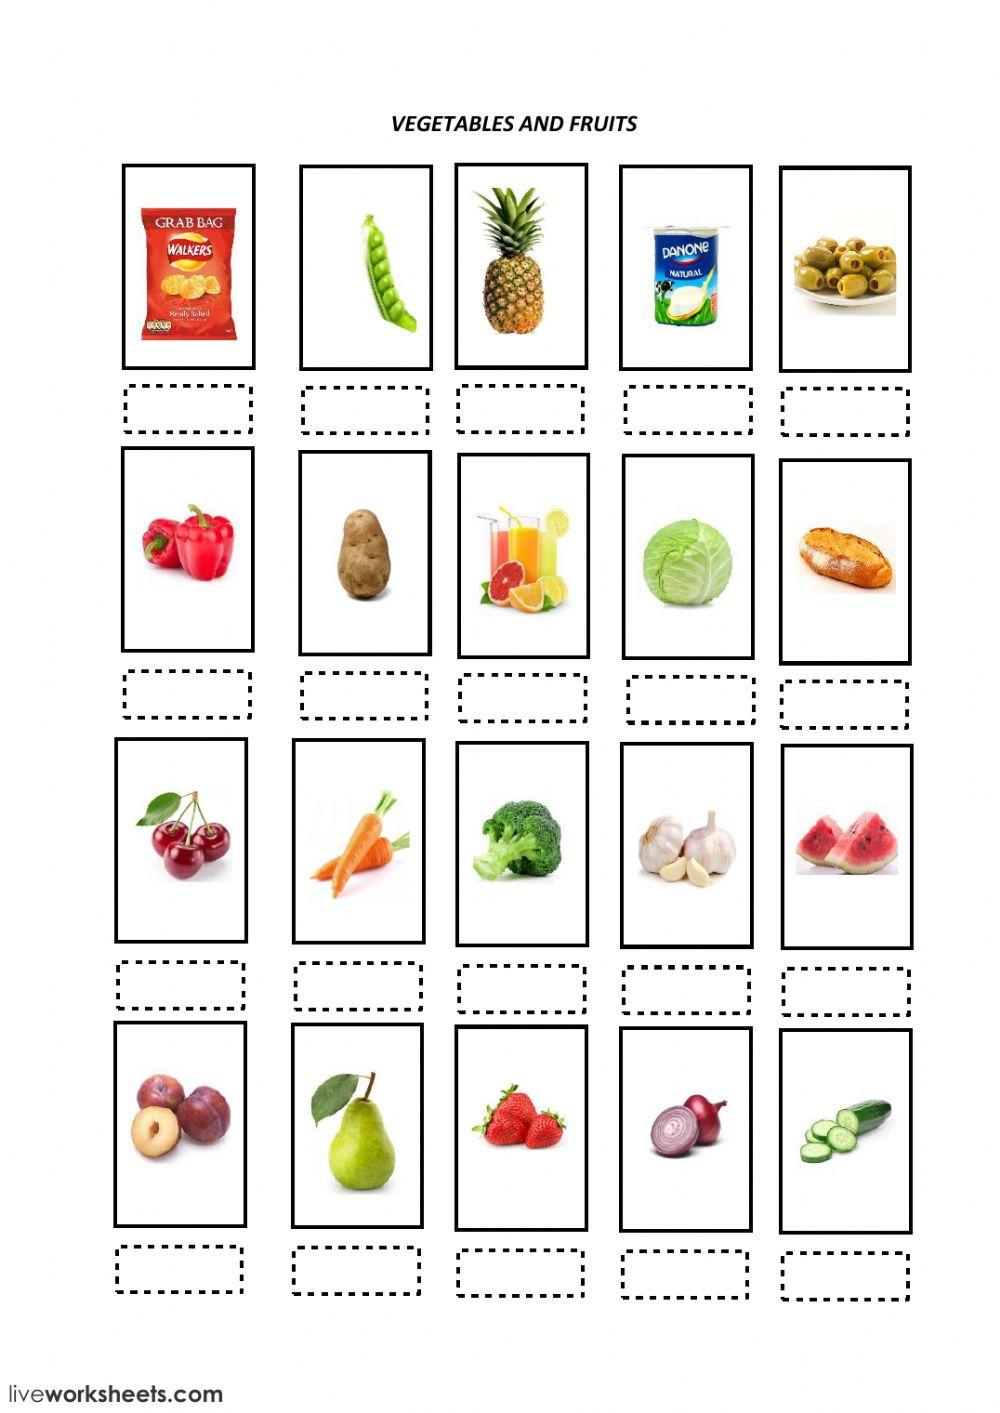 Vegetables and fruit test